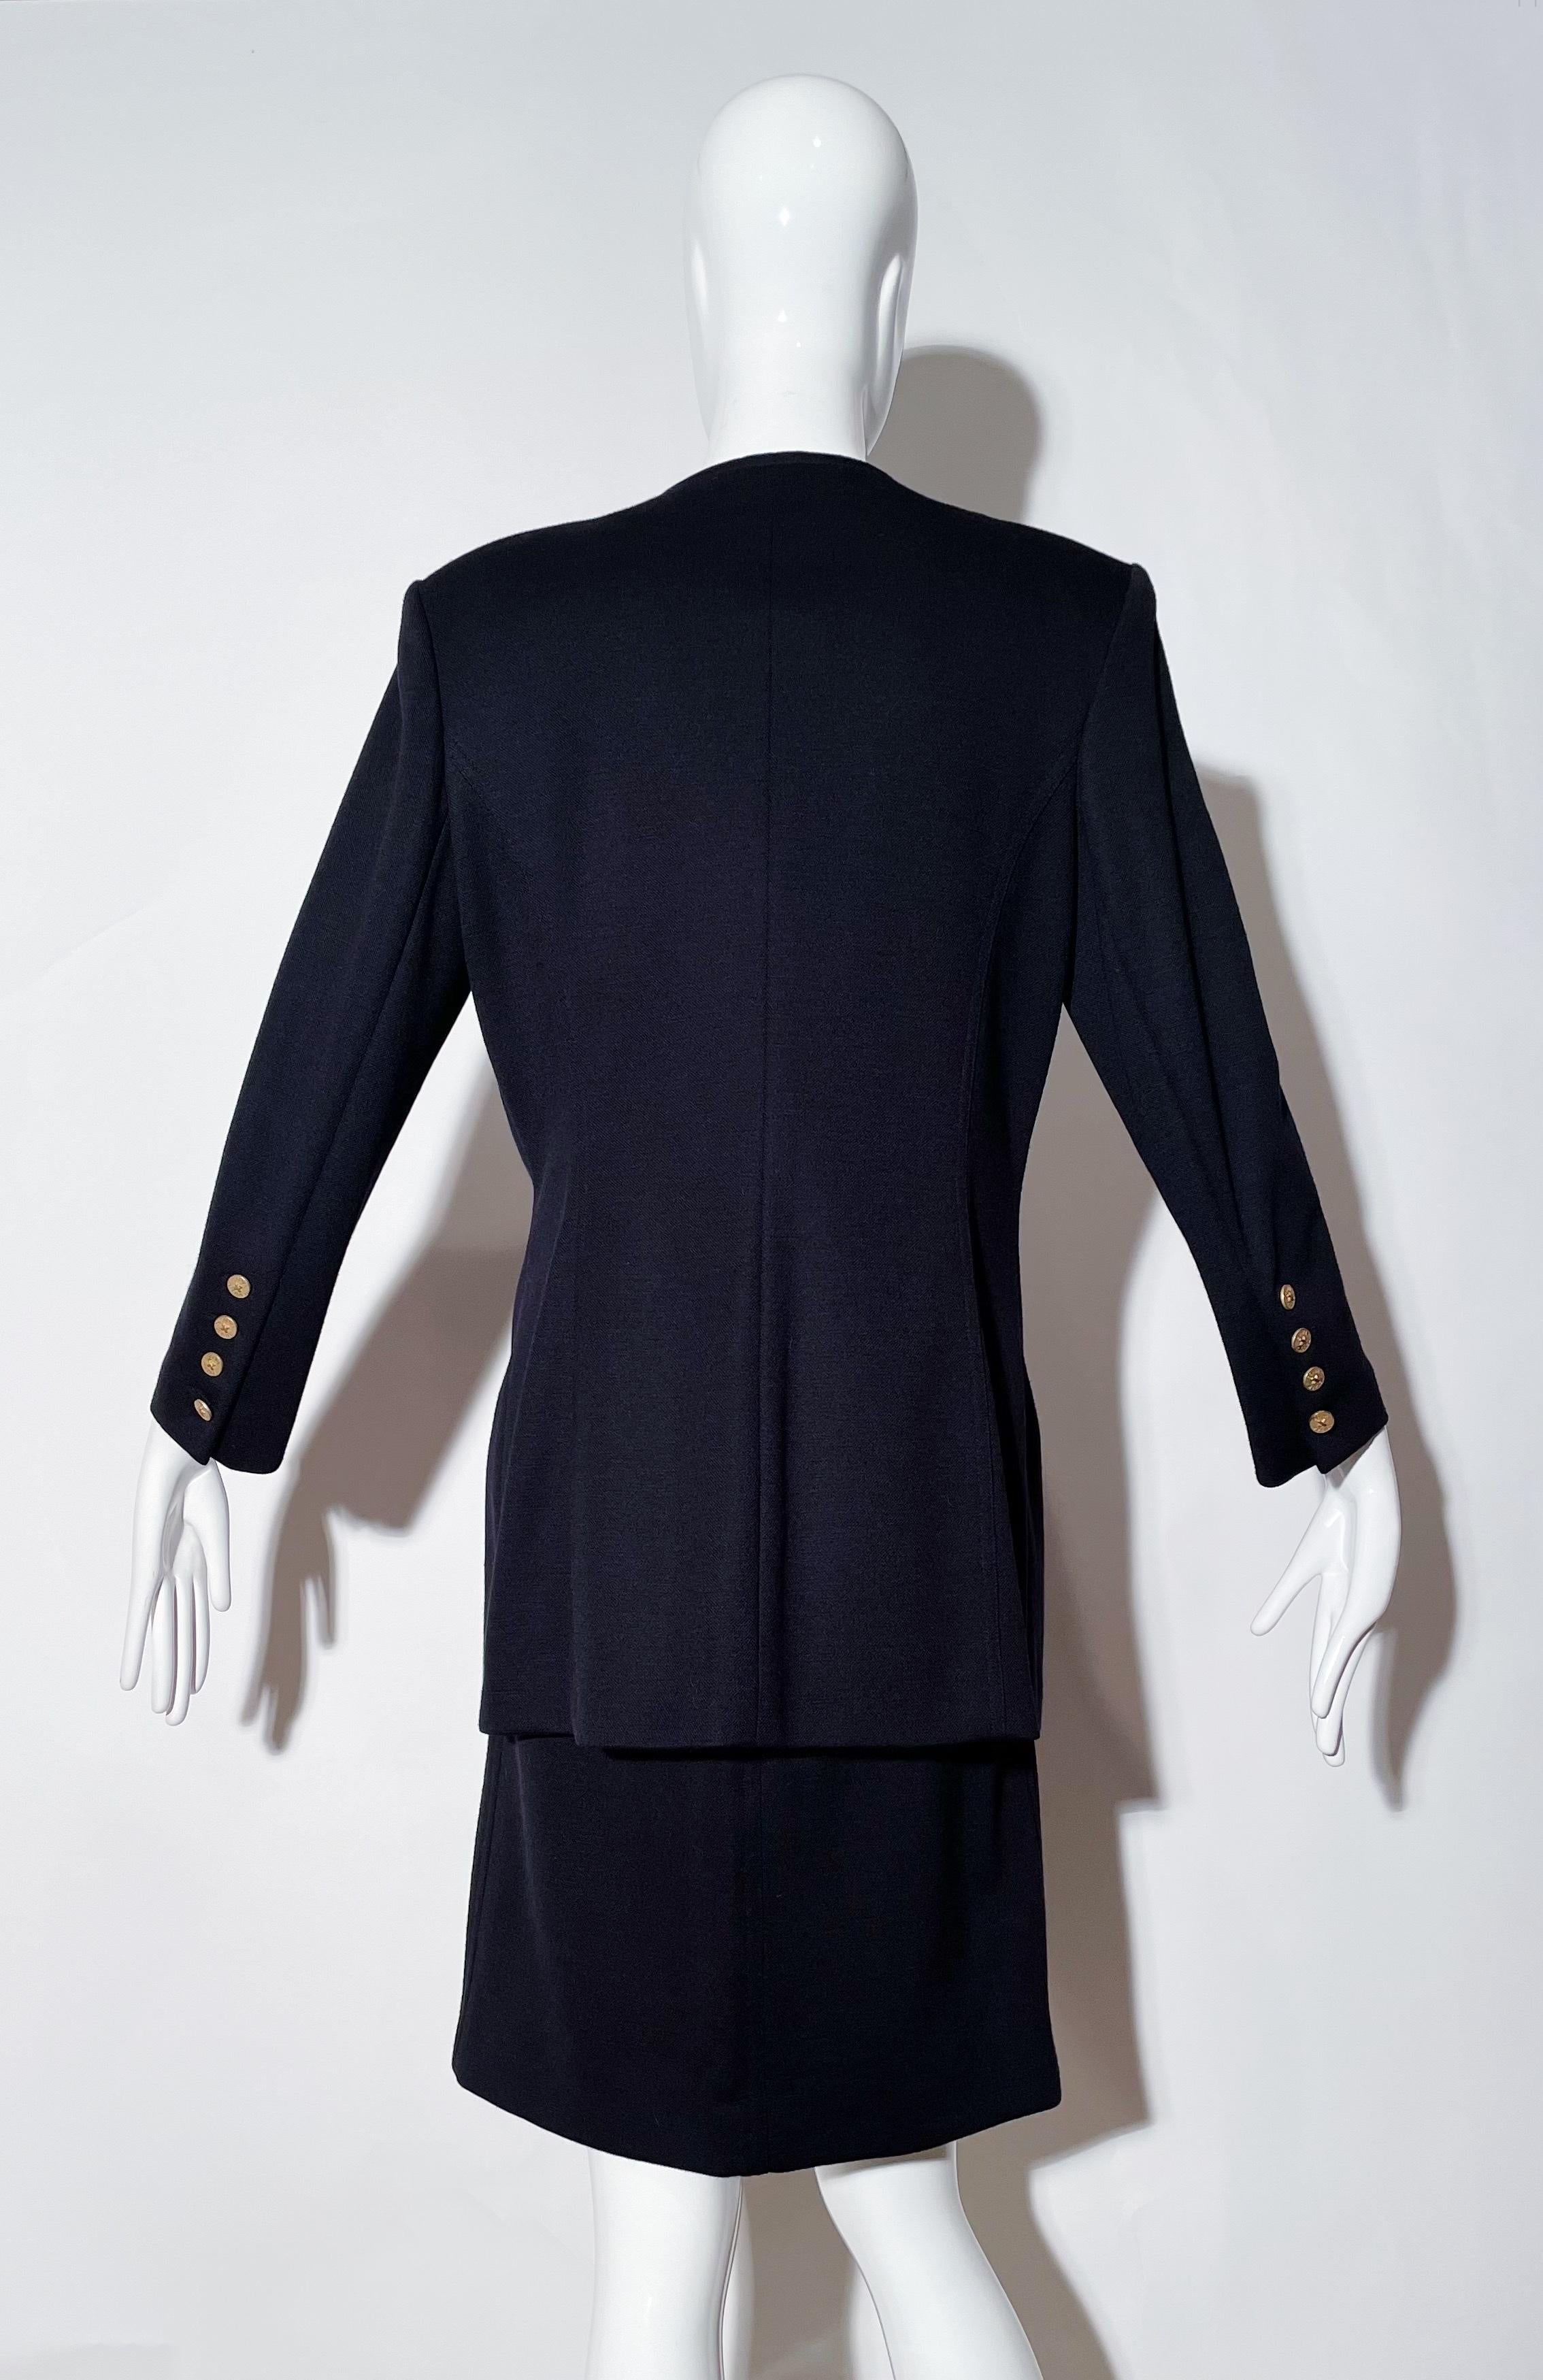 Sonia Rykiel Black Skirt Suit For Sale 2